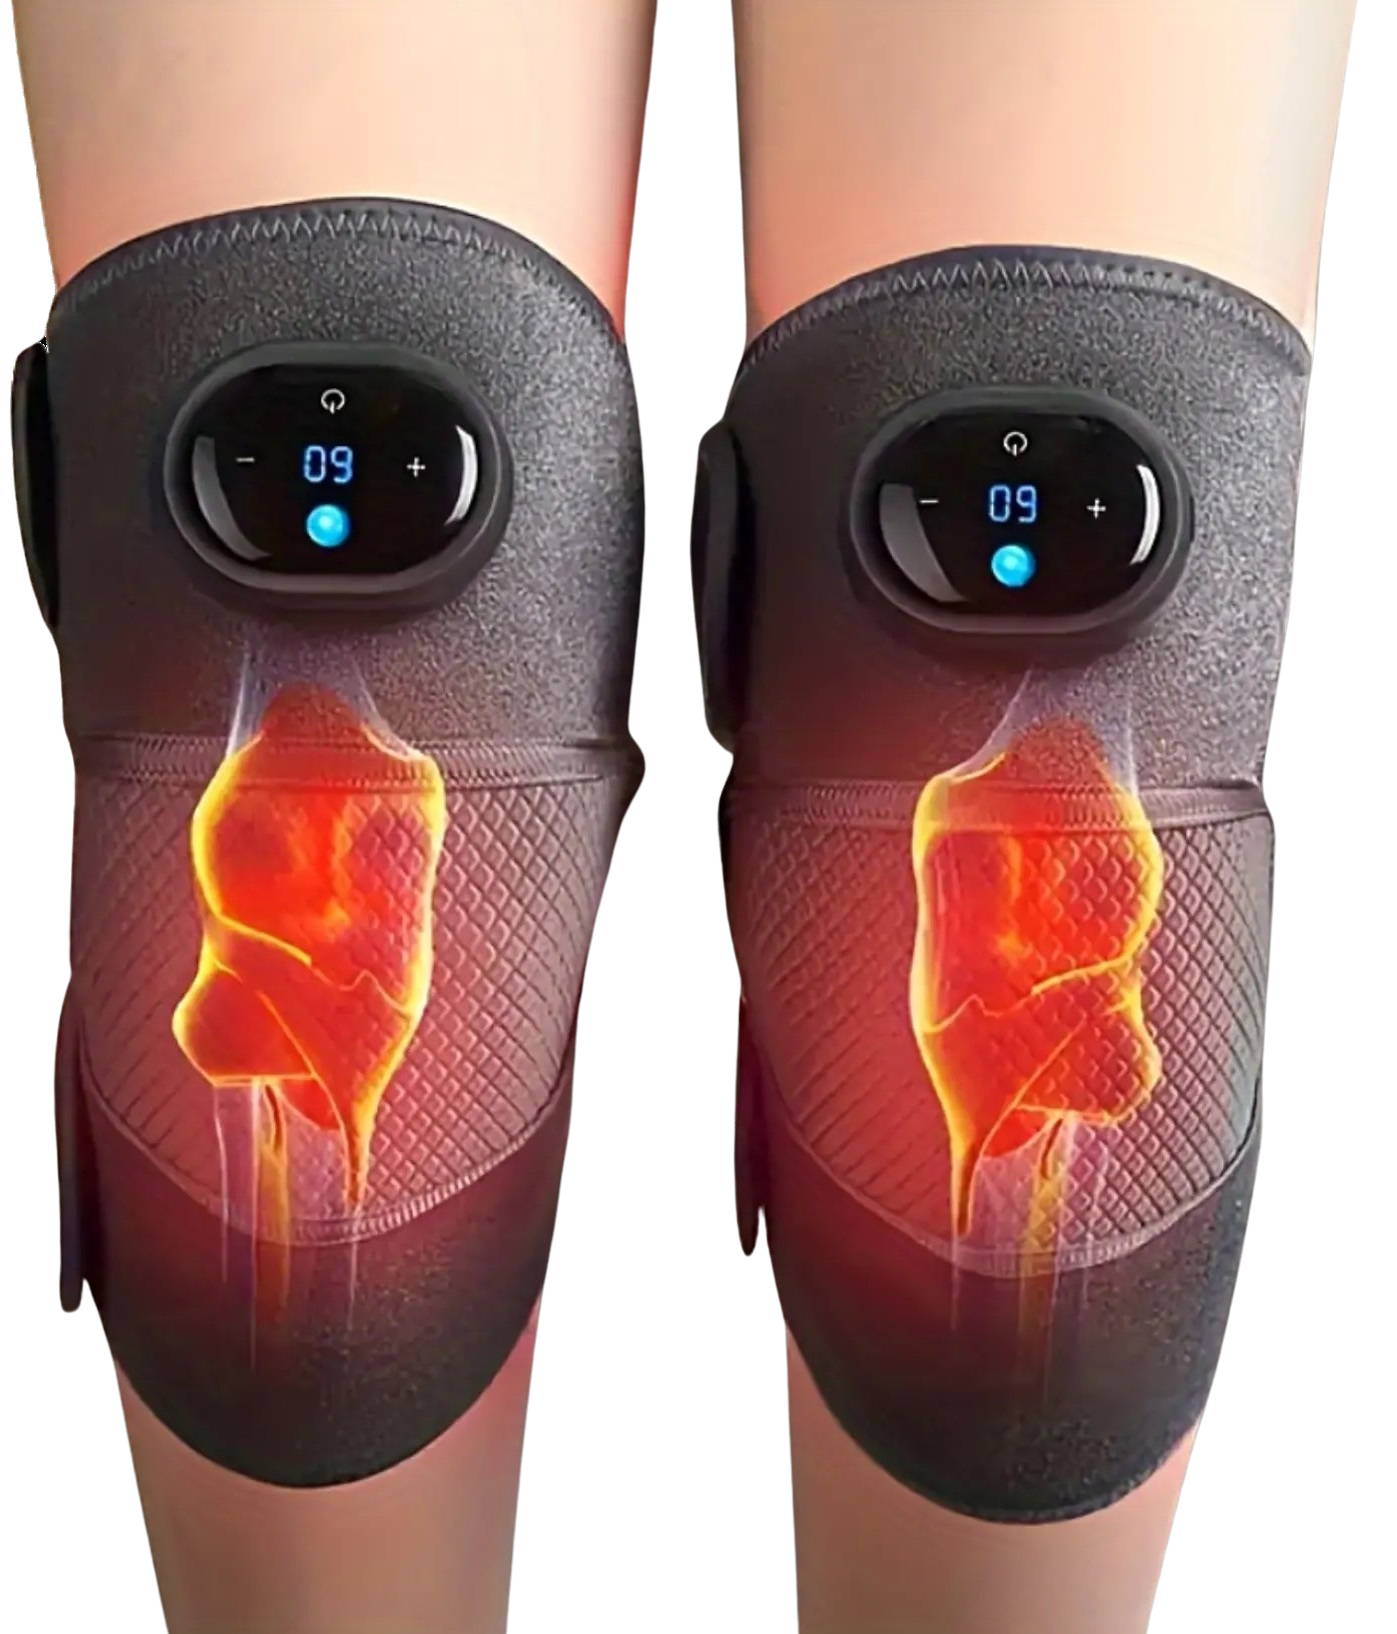 Knee Massagers being worn on legs